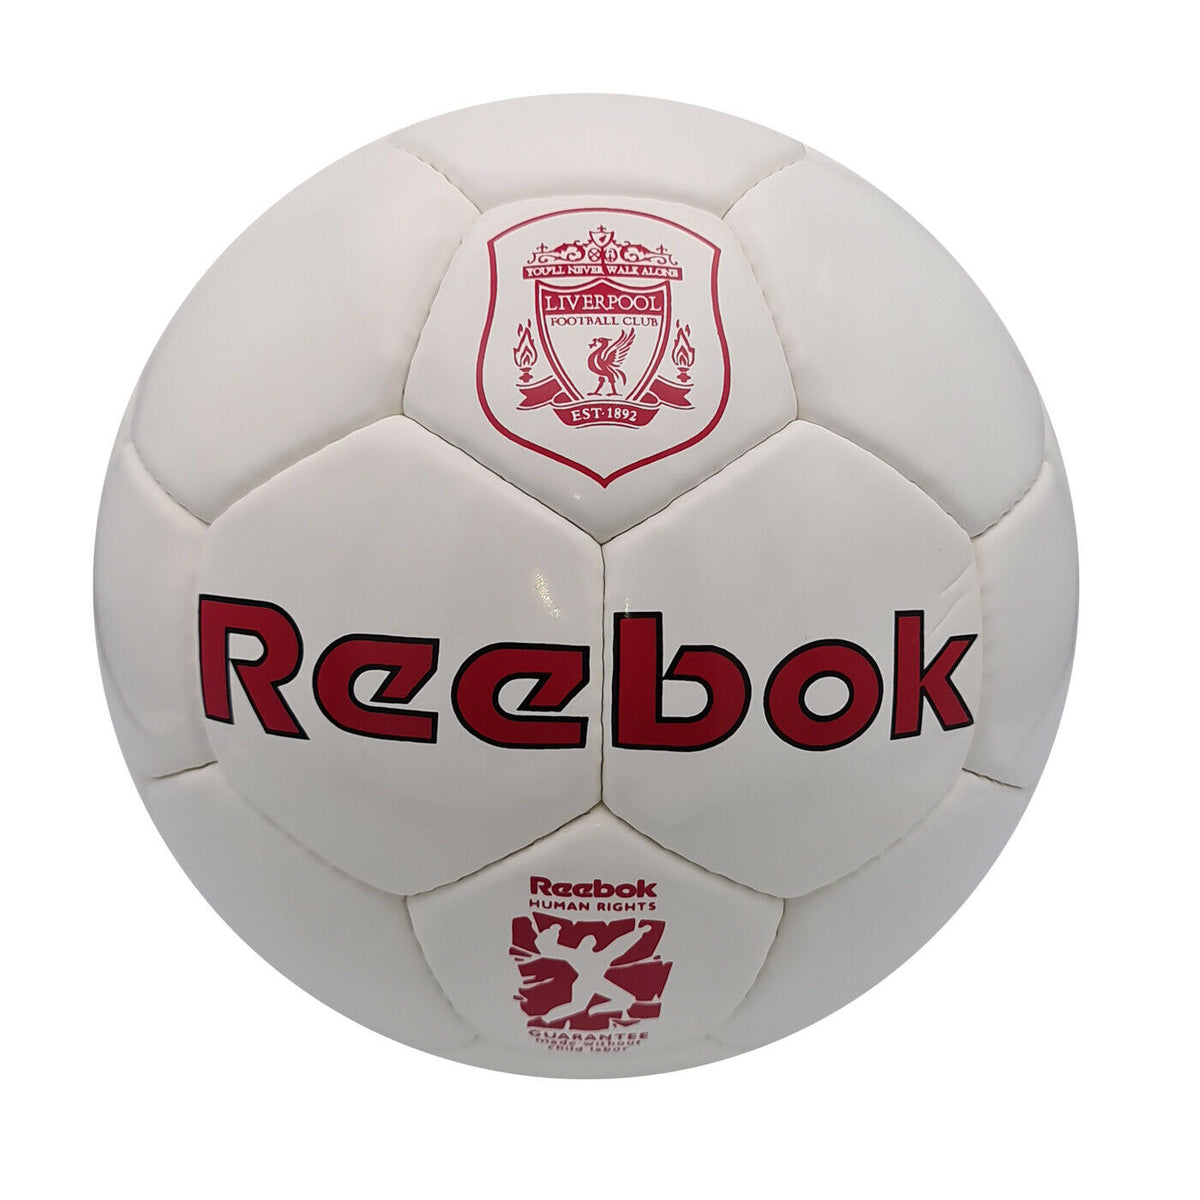 Reebok Liverpool FC Size 5 Original Vintage Official Football